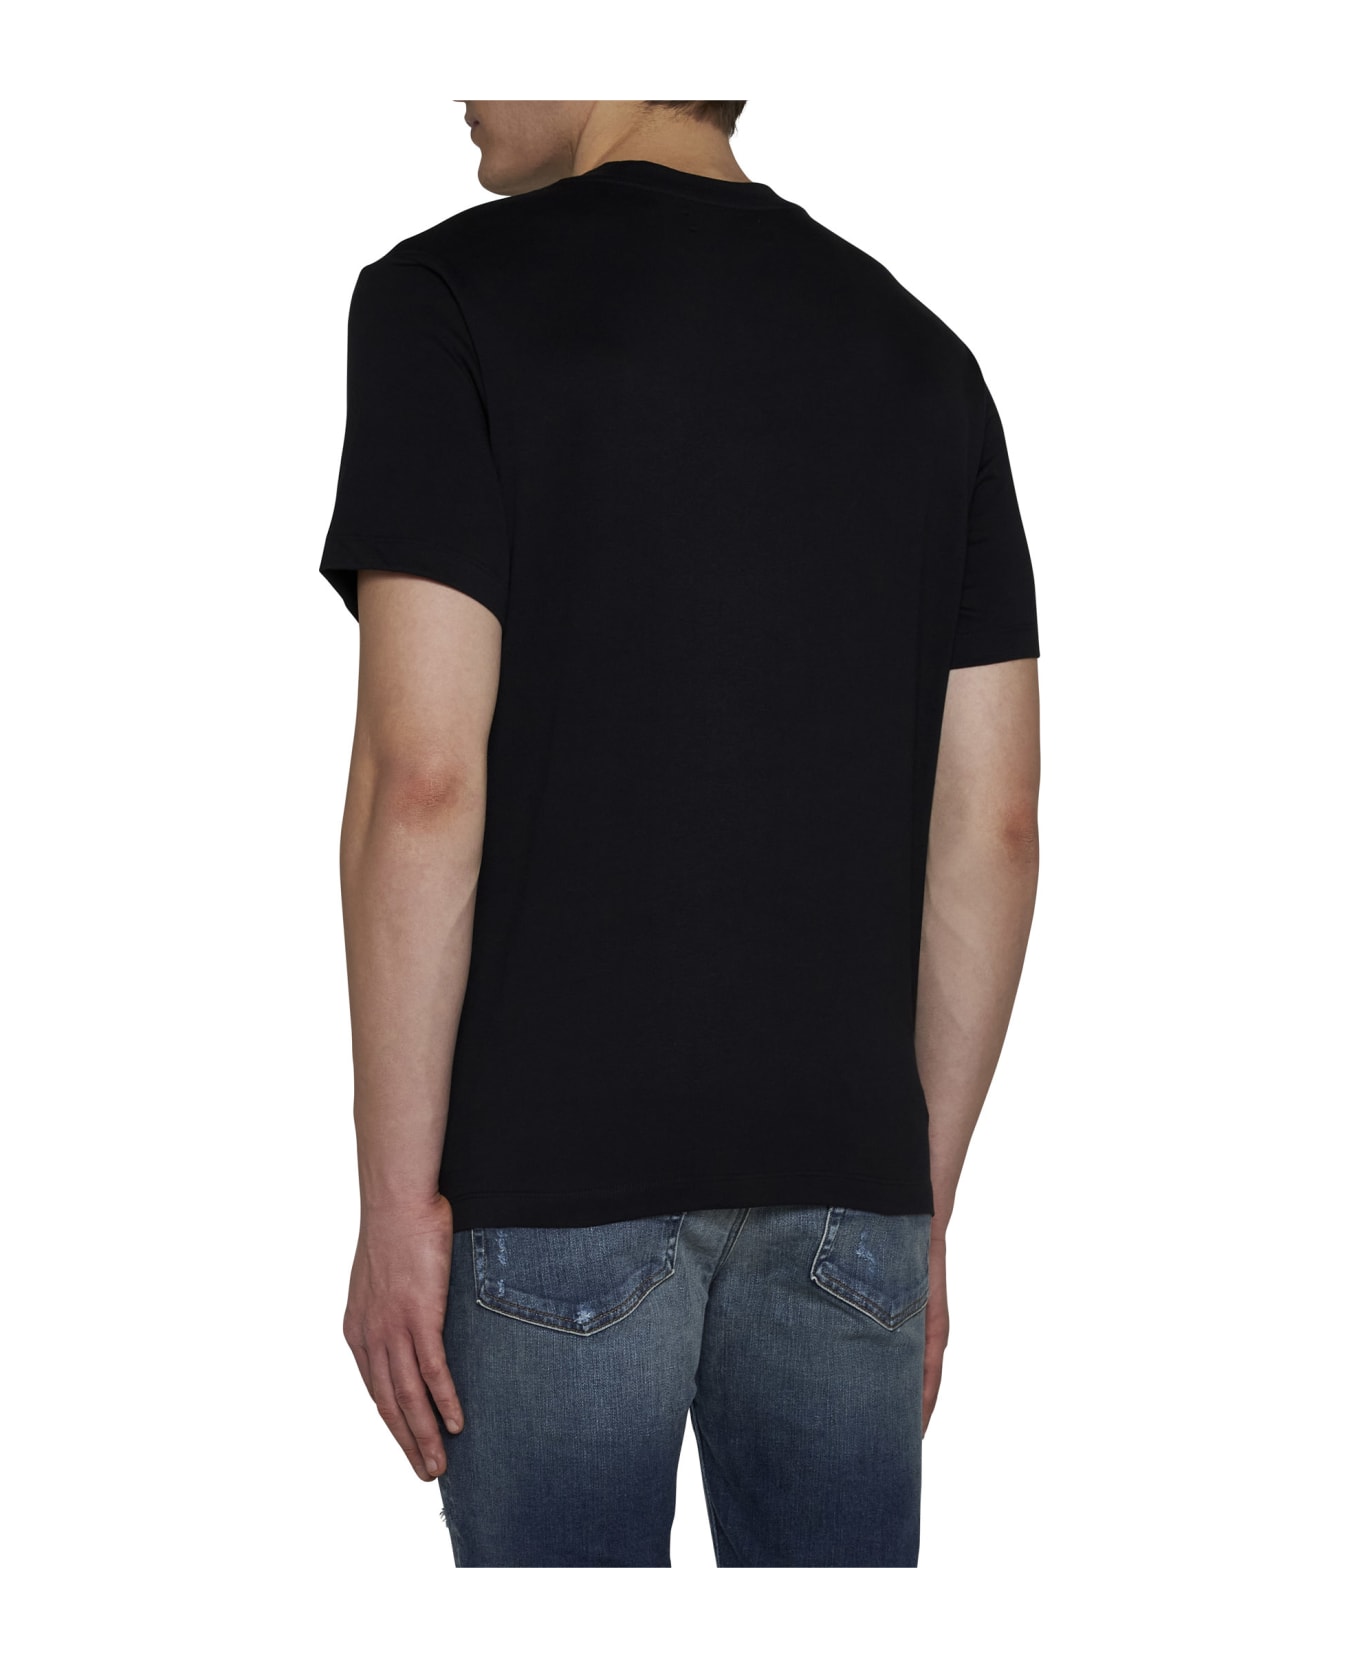 AMIRI T-Shirt - Black